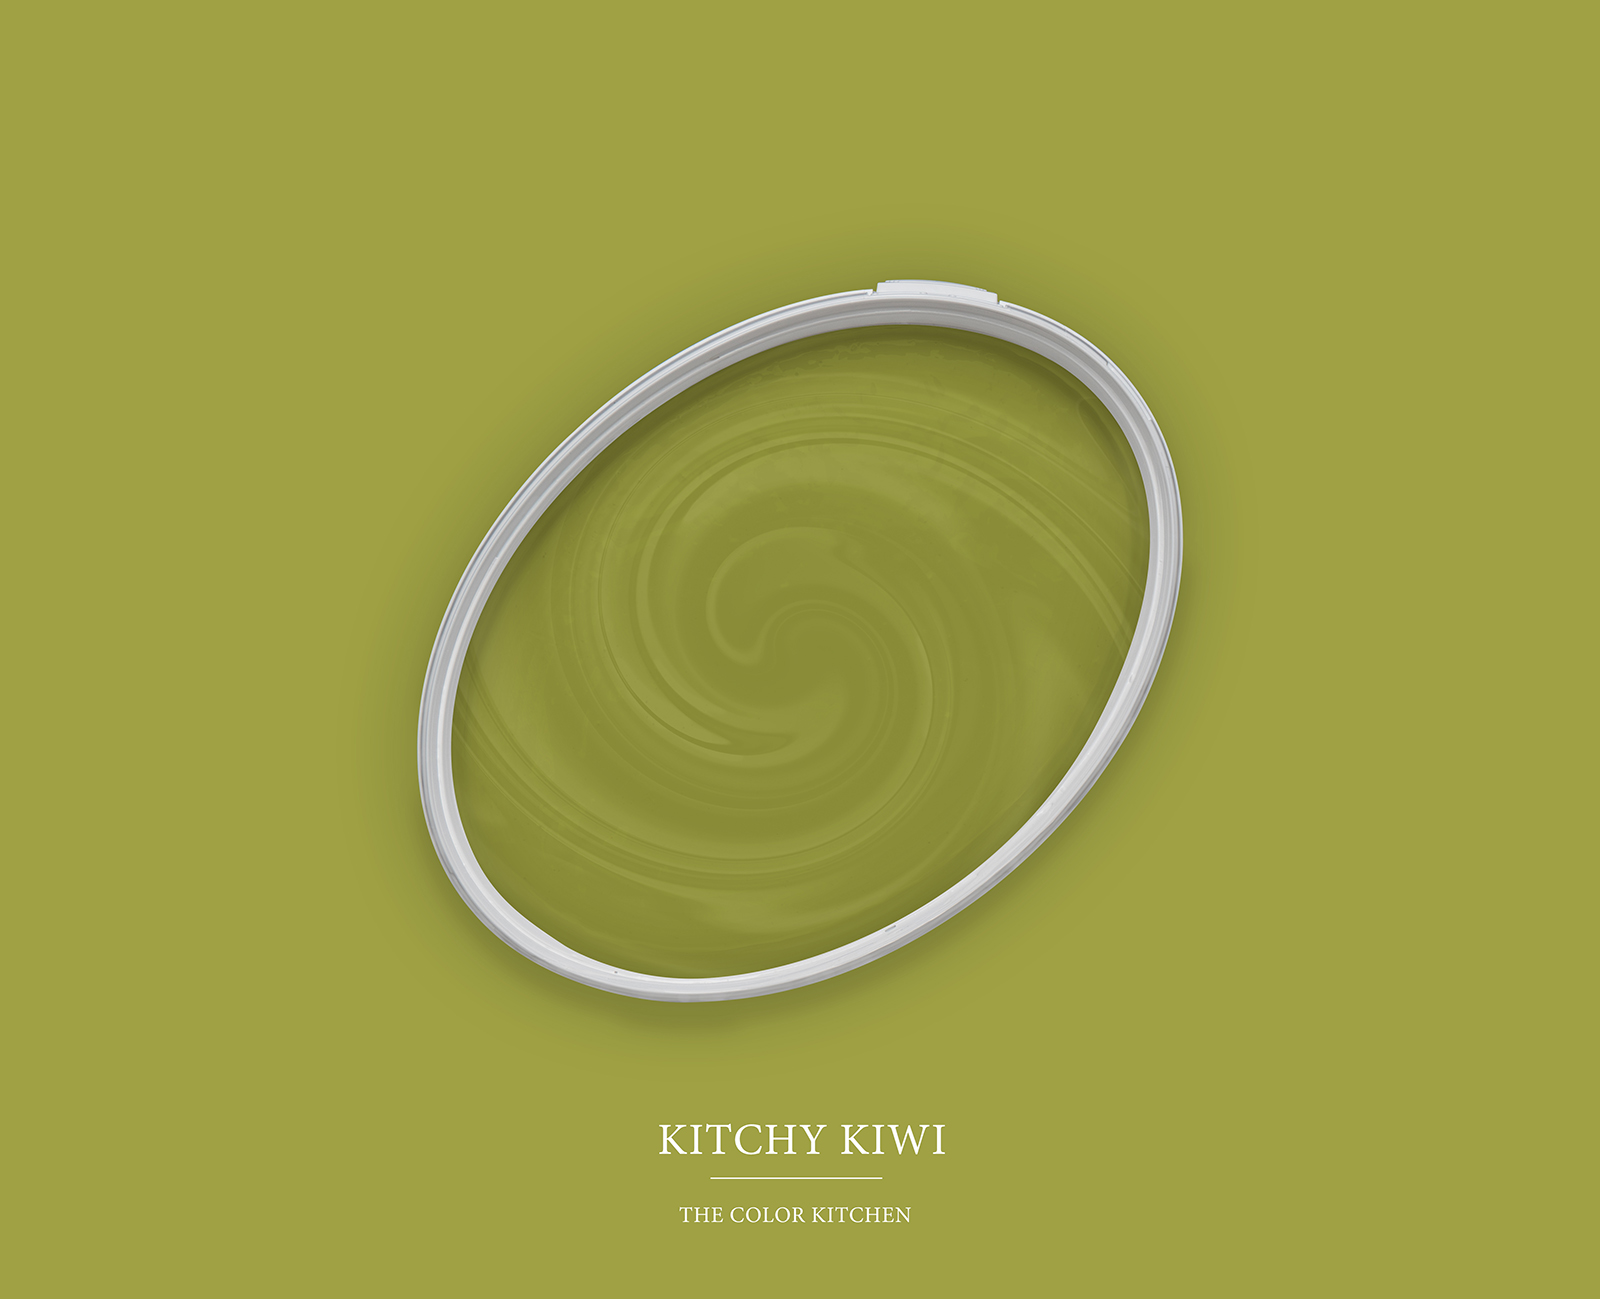         Wandfarbe in knalligem Gelbgrün »Kitchy Kiwi« TCK4009 – 2,5 Liter
    